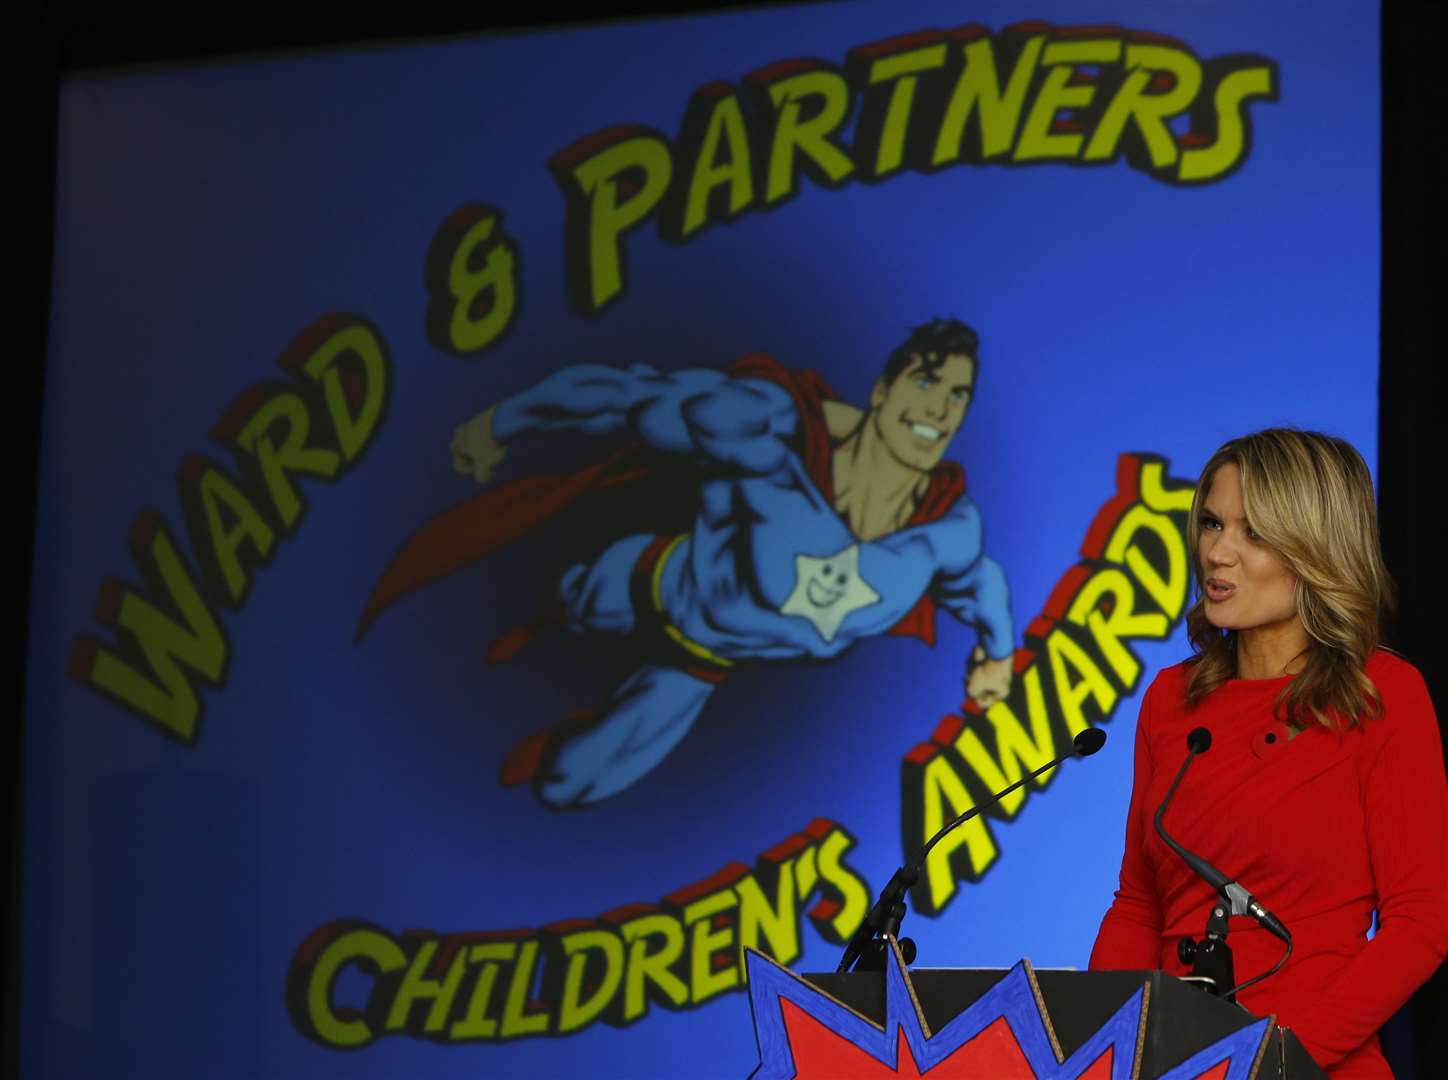 Charlotte presenting the Wards Children's Award in 2018